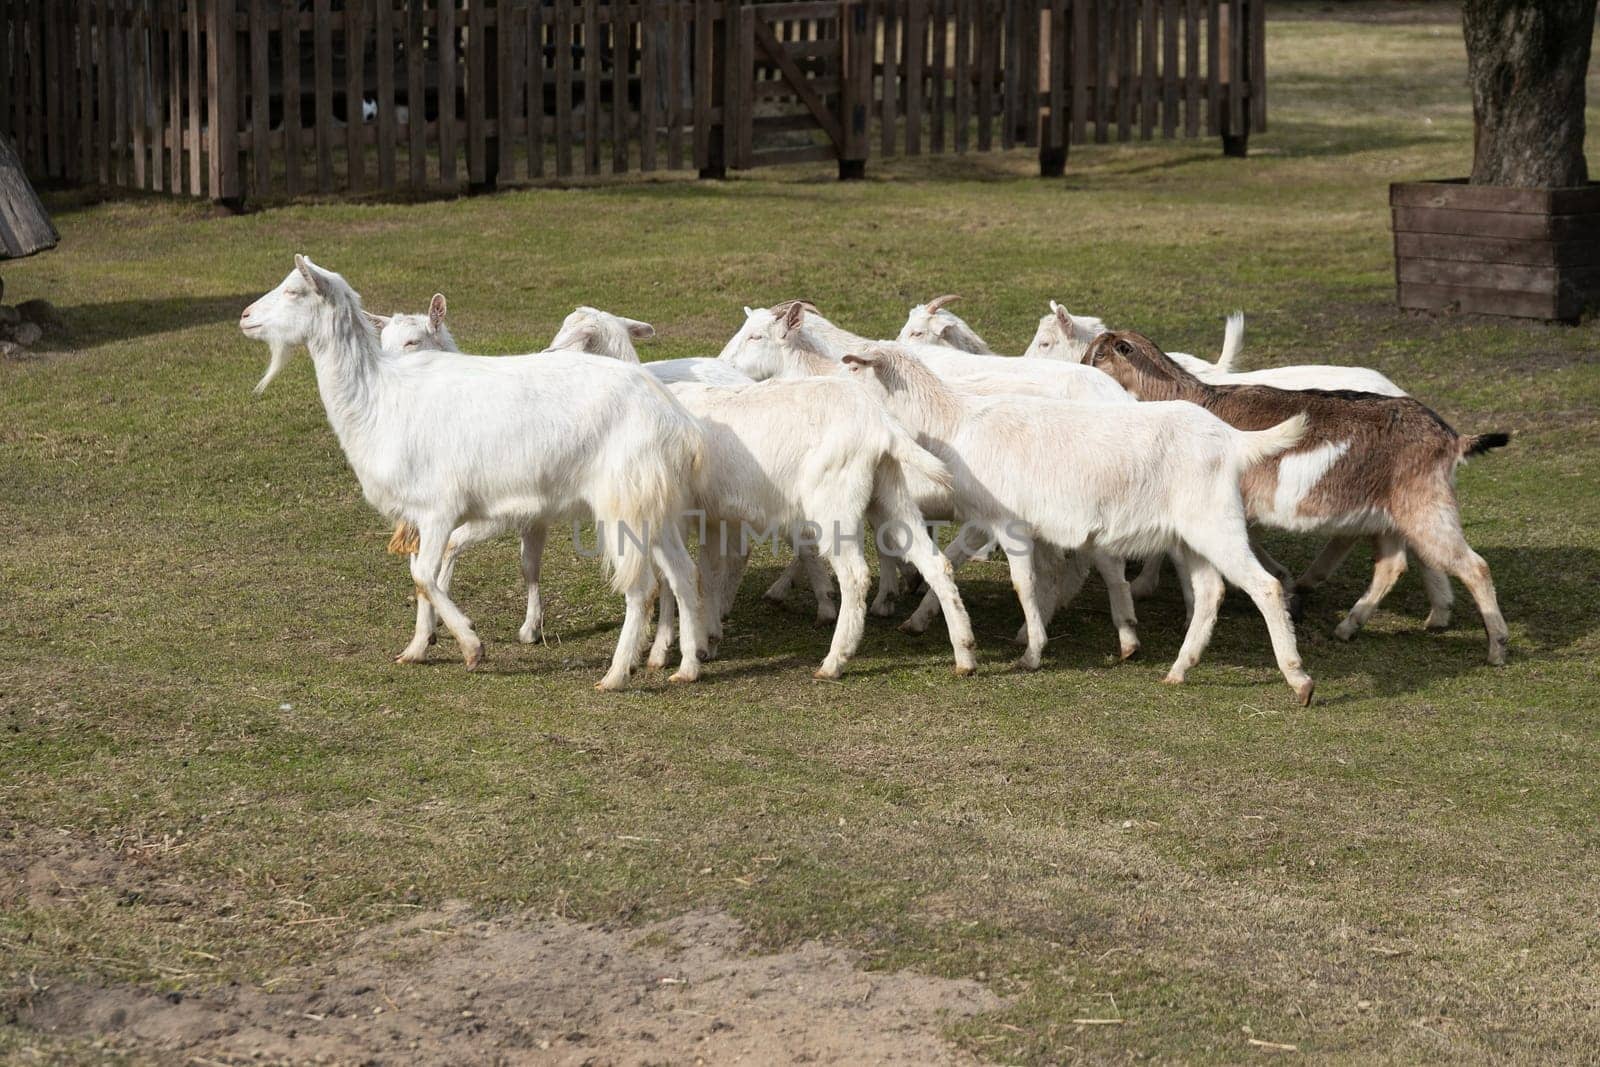 A Herd of Goats Walking Across a Lush Green Field by TRMK